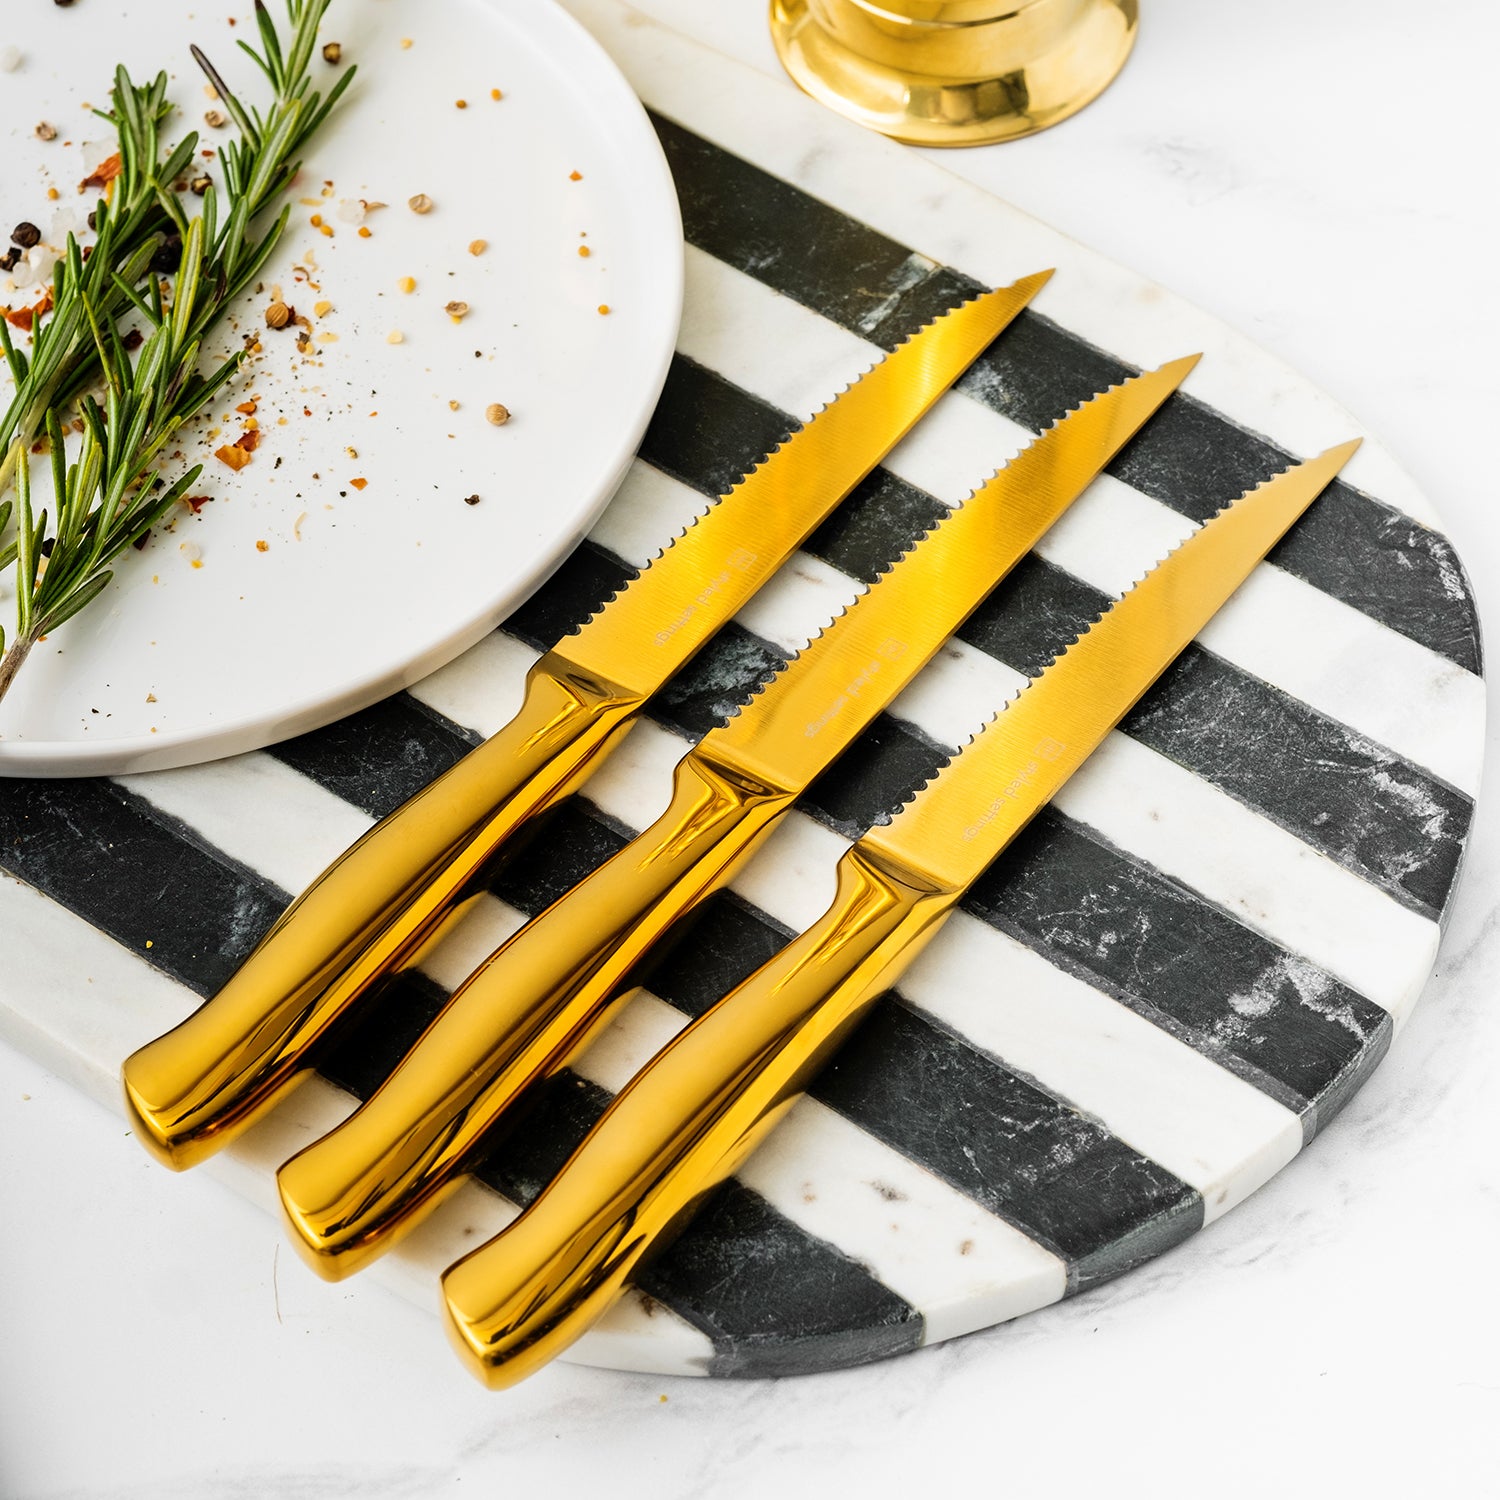 Gold Knife Set with White Self-Sharpening Block